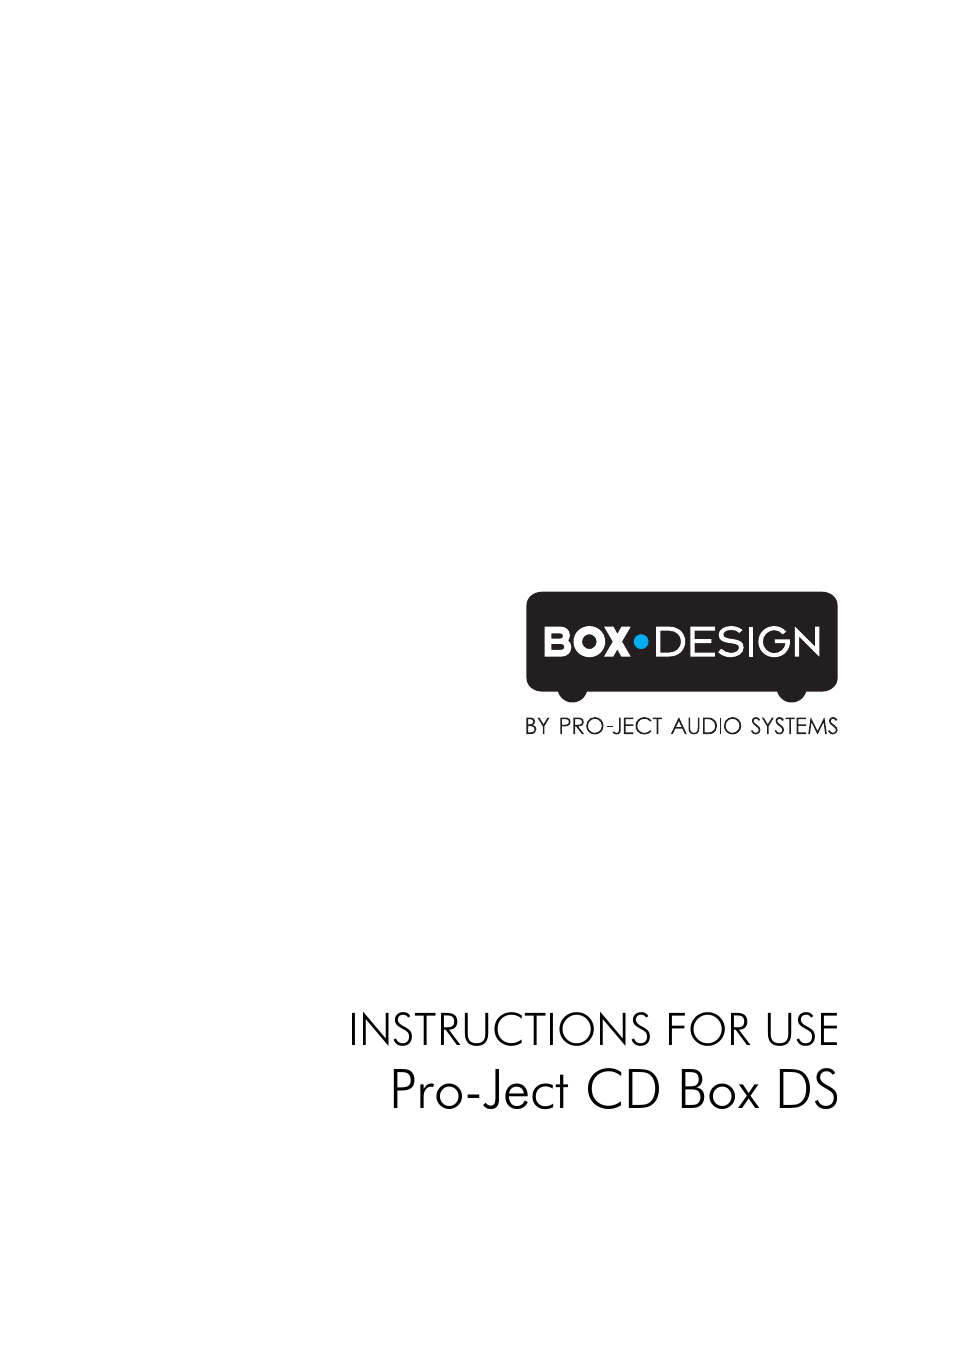 CD Box DS